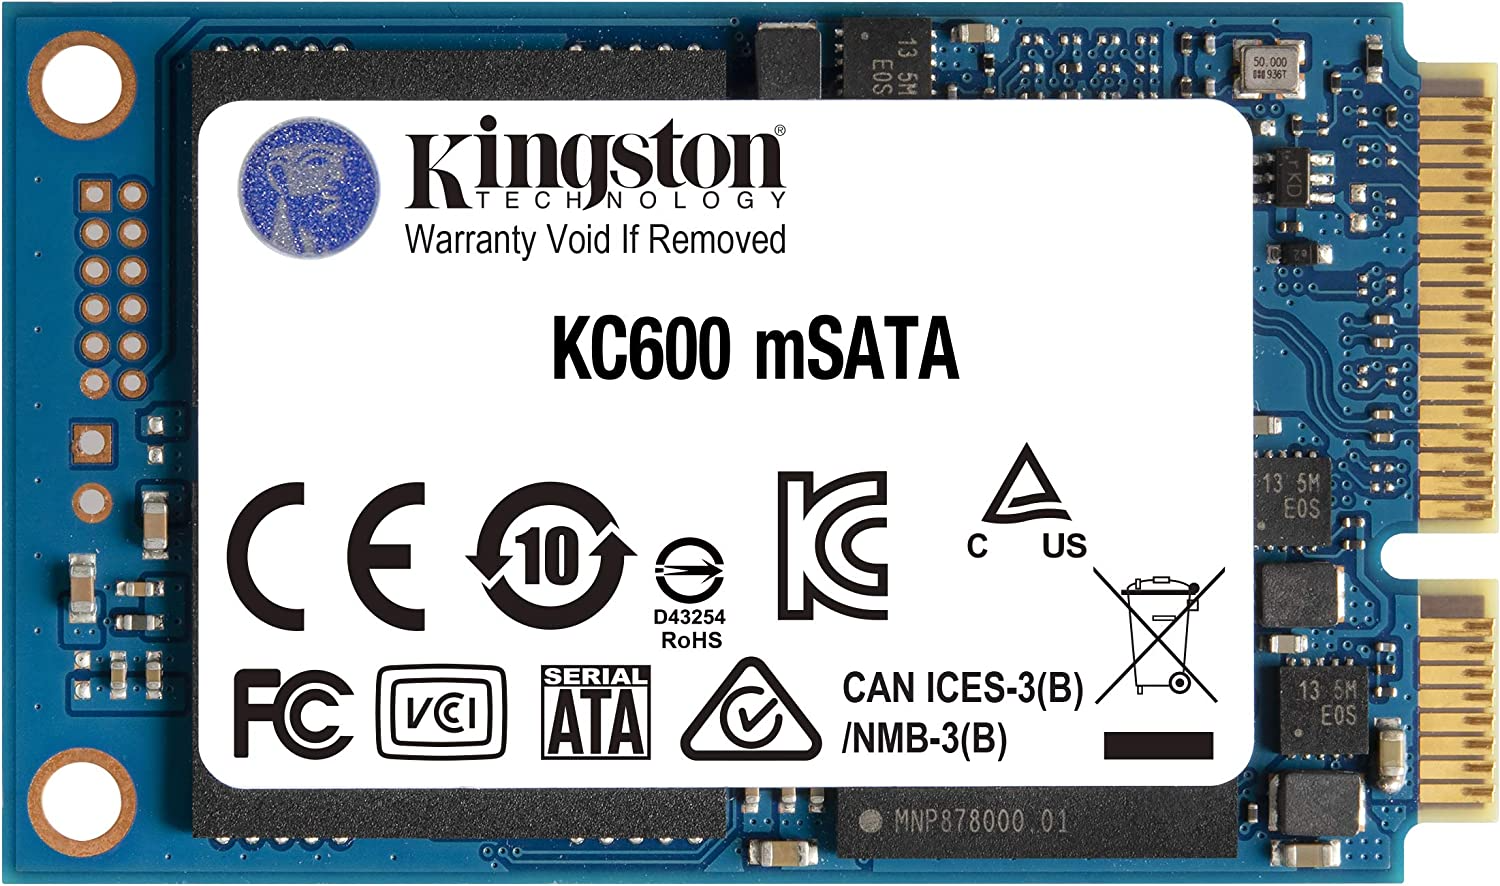 KINGSTON KC600 3D&#8221; 256GB mSATA INTERNAL SSD - SKC600MS/256G